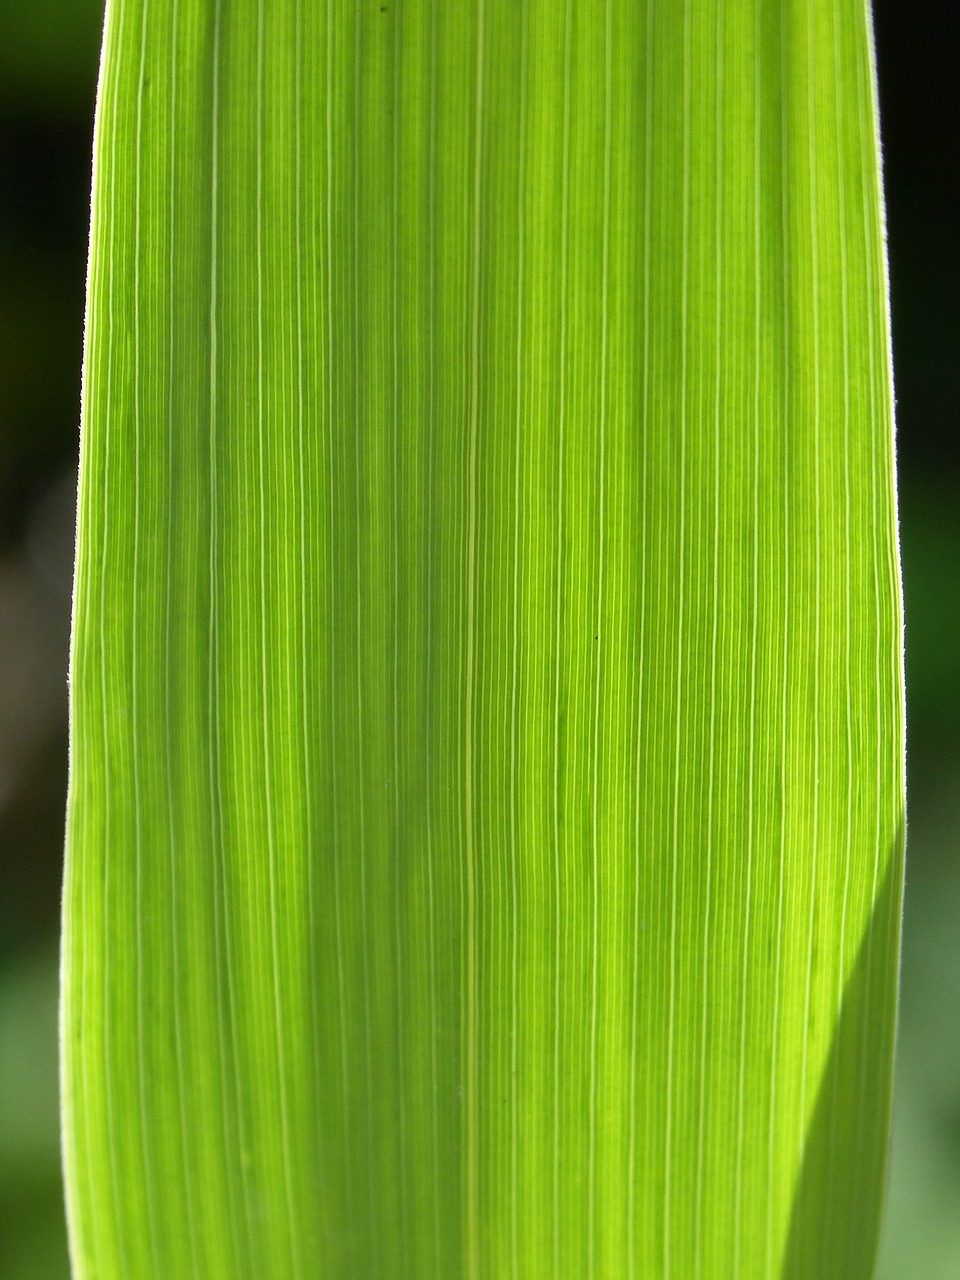 leaf strands background free photo